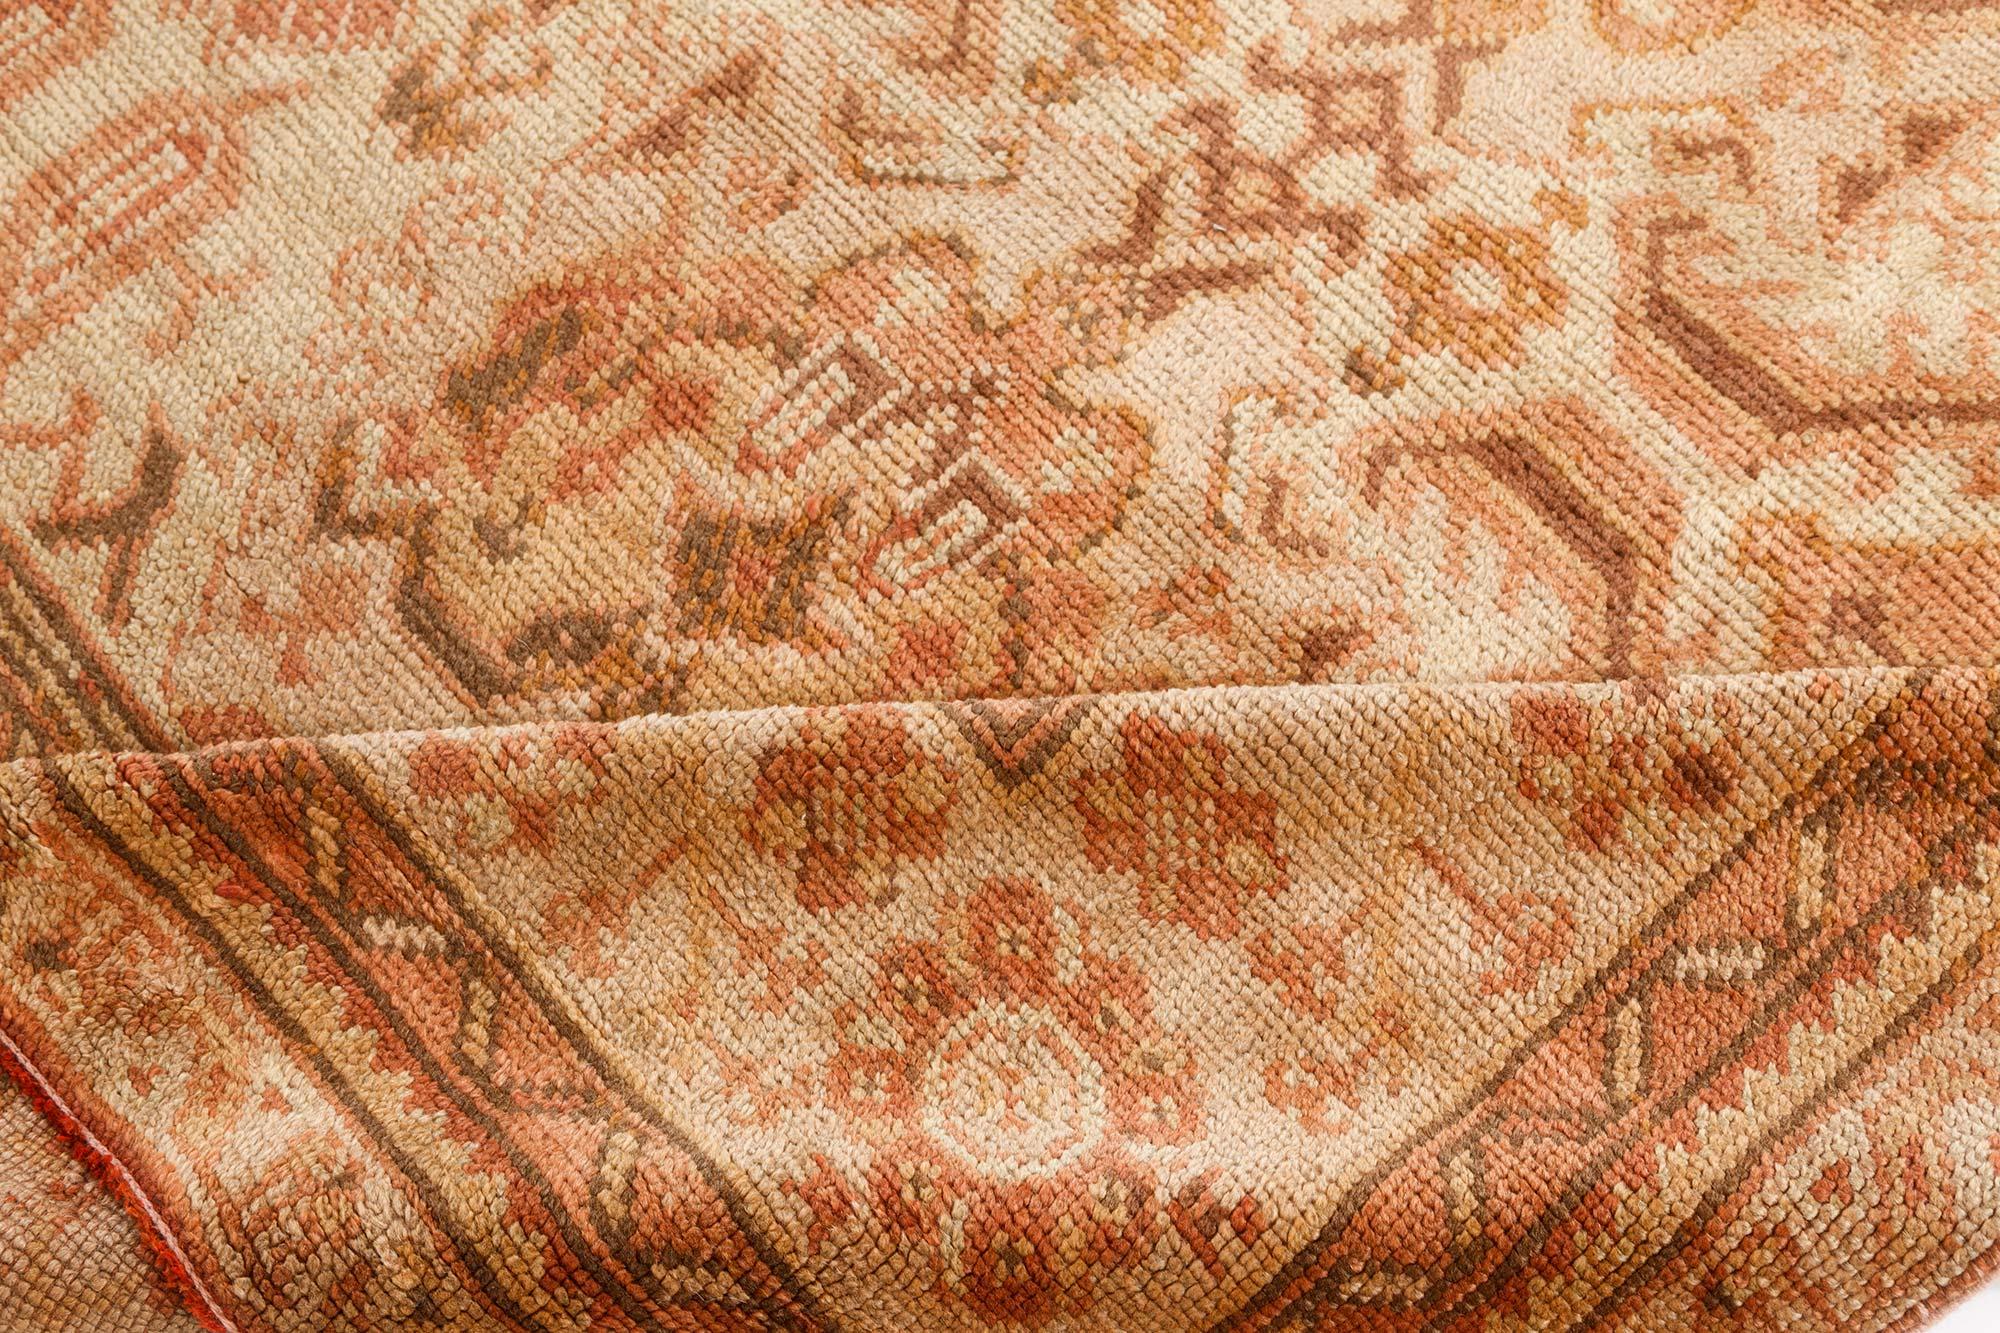 One-of-a-kind Oversized Vintage Turkish Oushak carpet
Size: 16'10